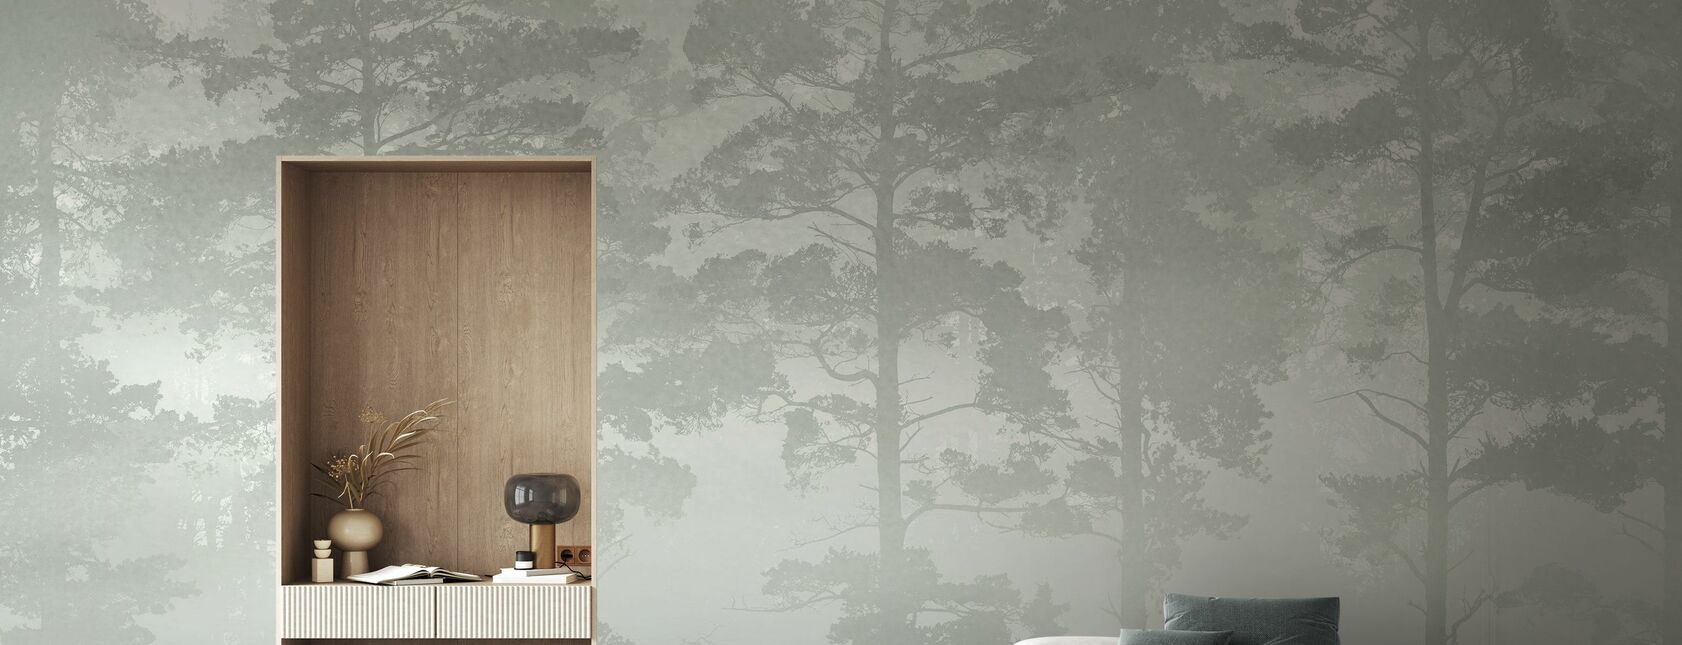 Misty Pine Forest - Green - Wallpaper - Living Room